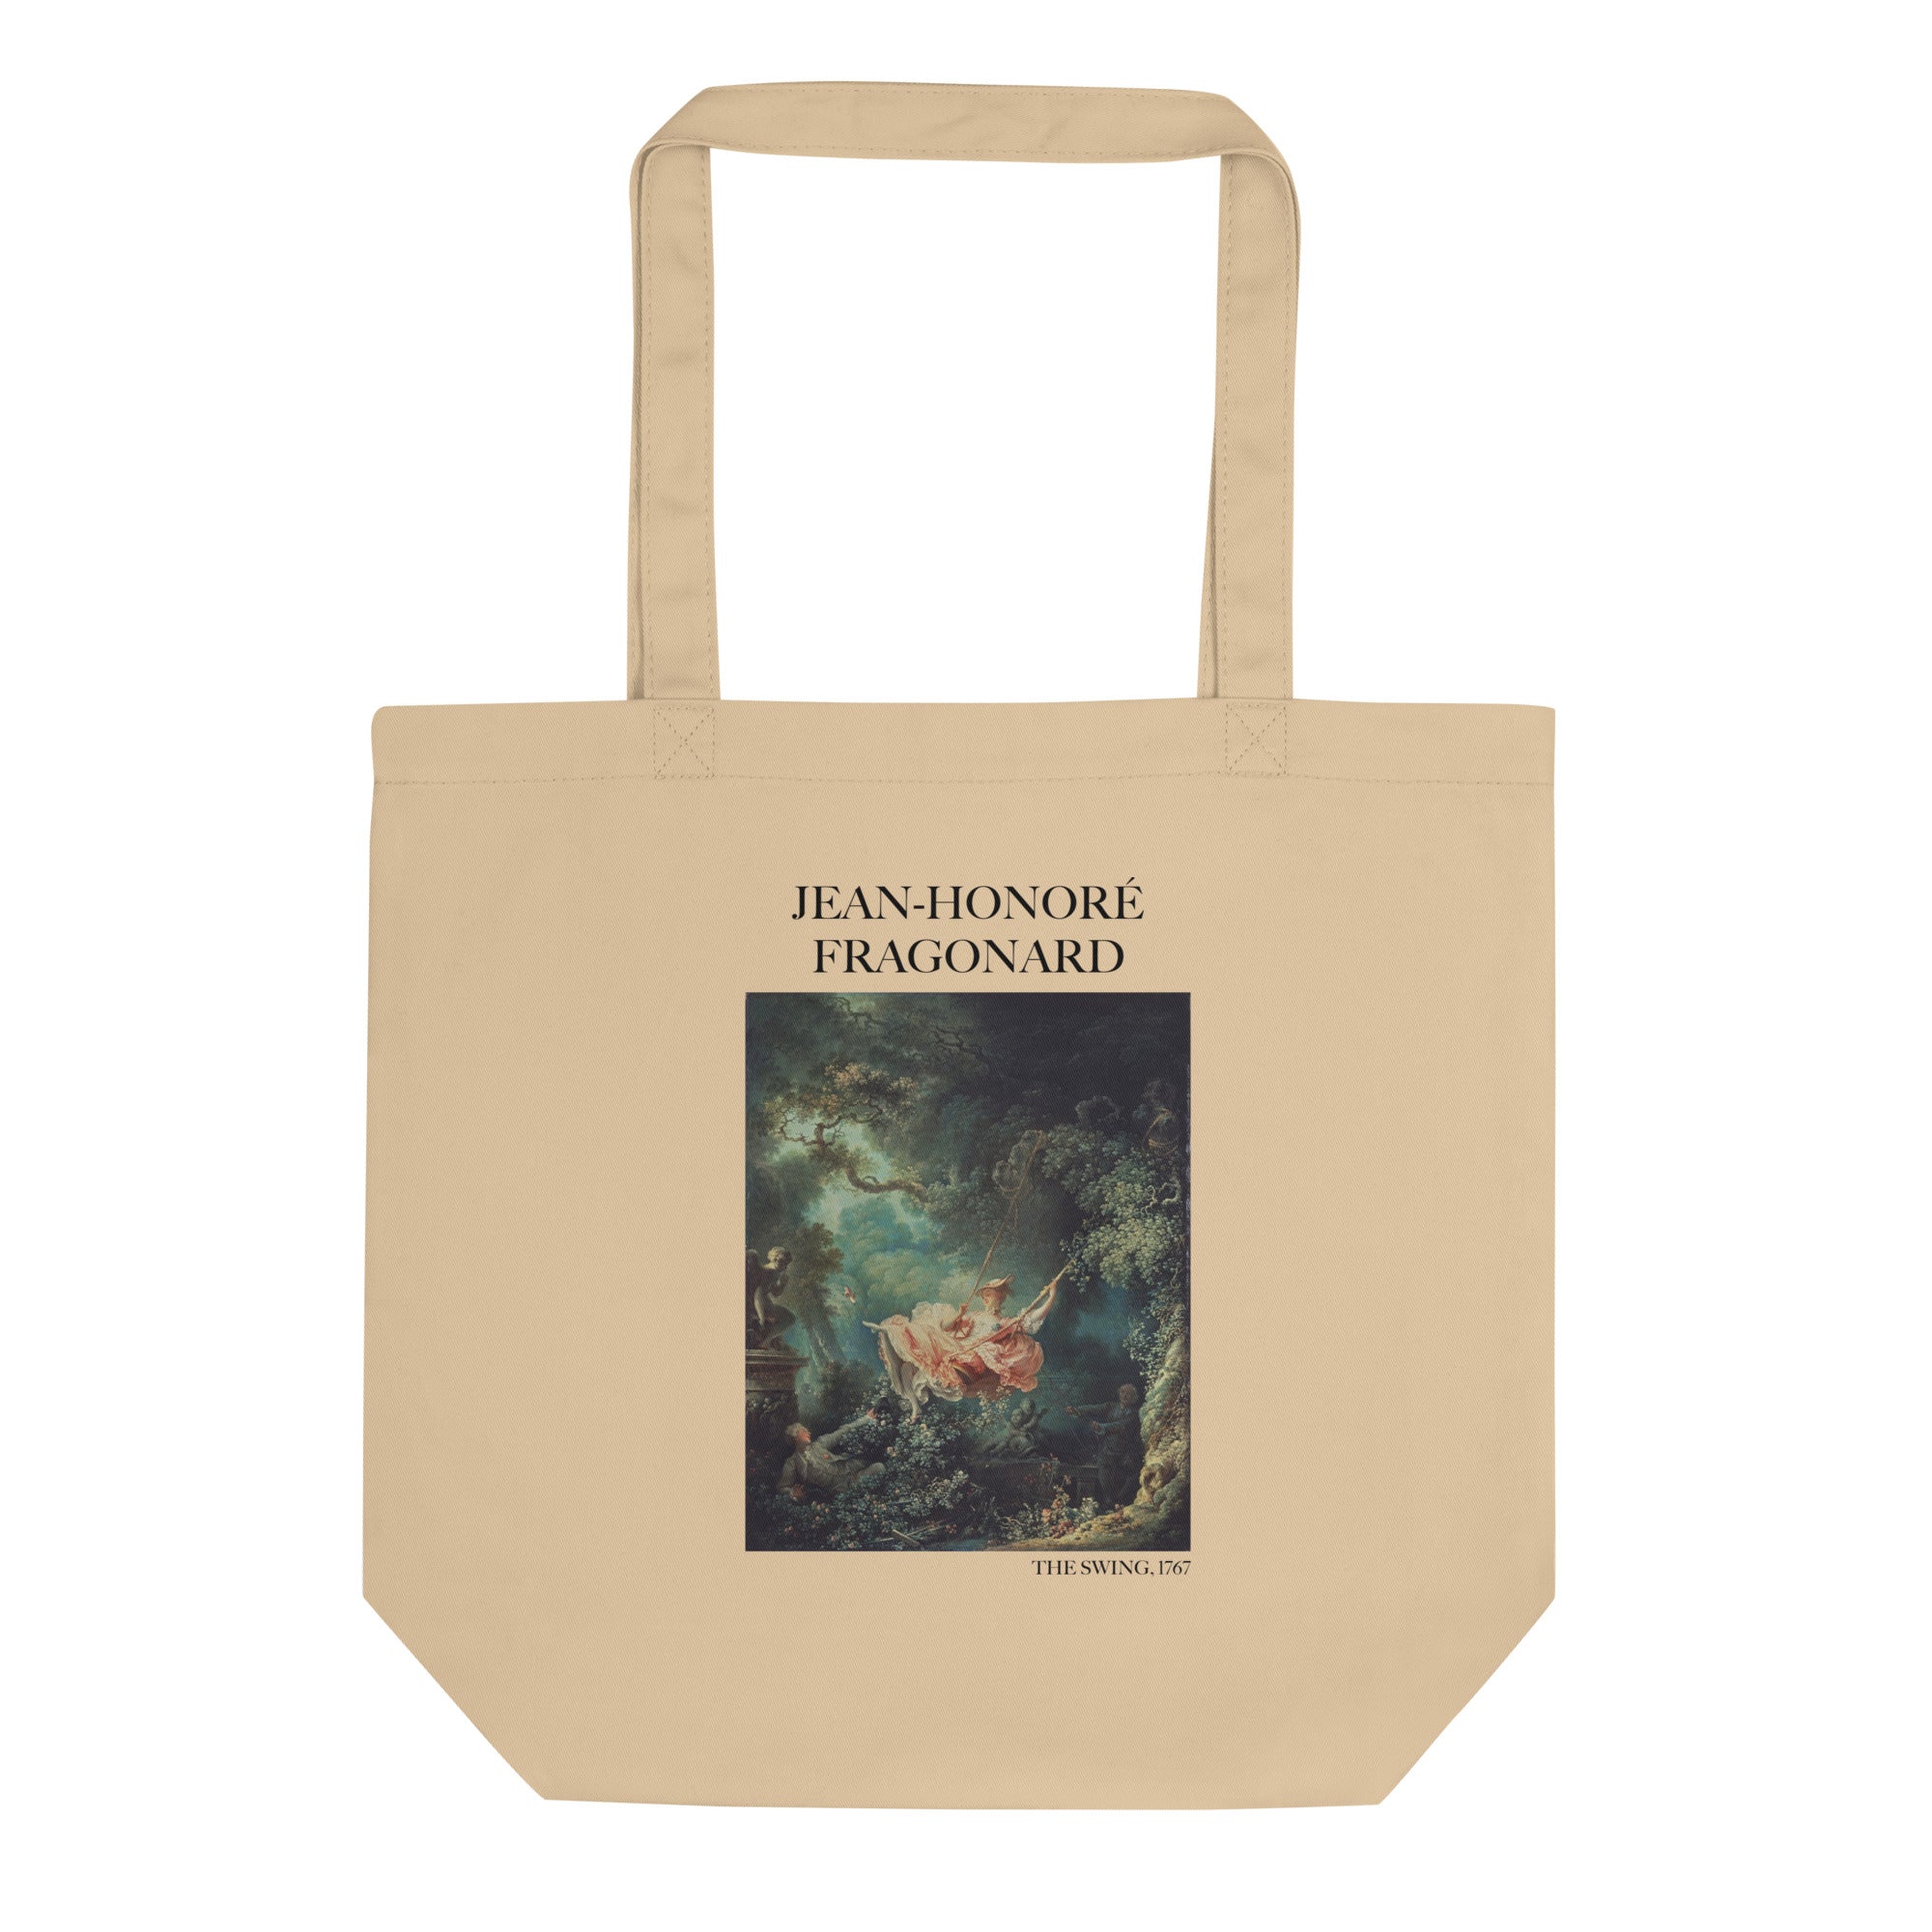 Jean-Honoré Fragonard 'The Swing' Famous Painting Totebag | Eco Friendly Art Tote Bag